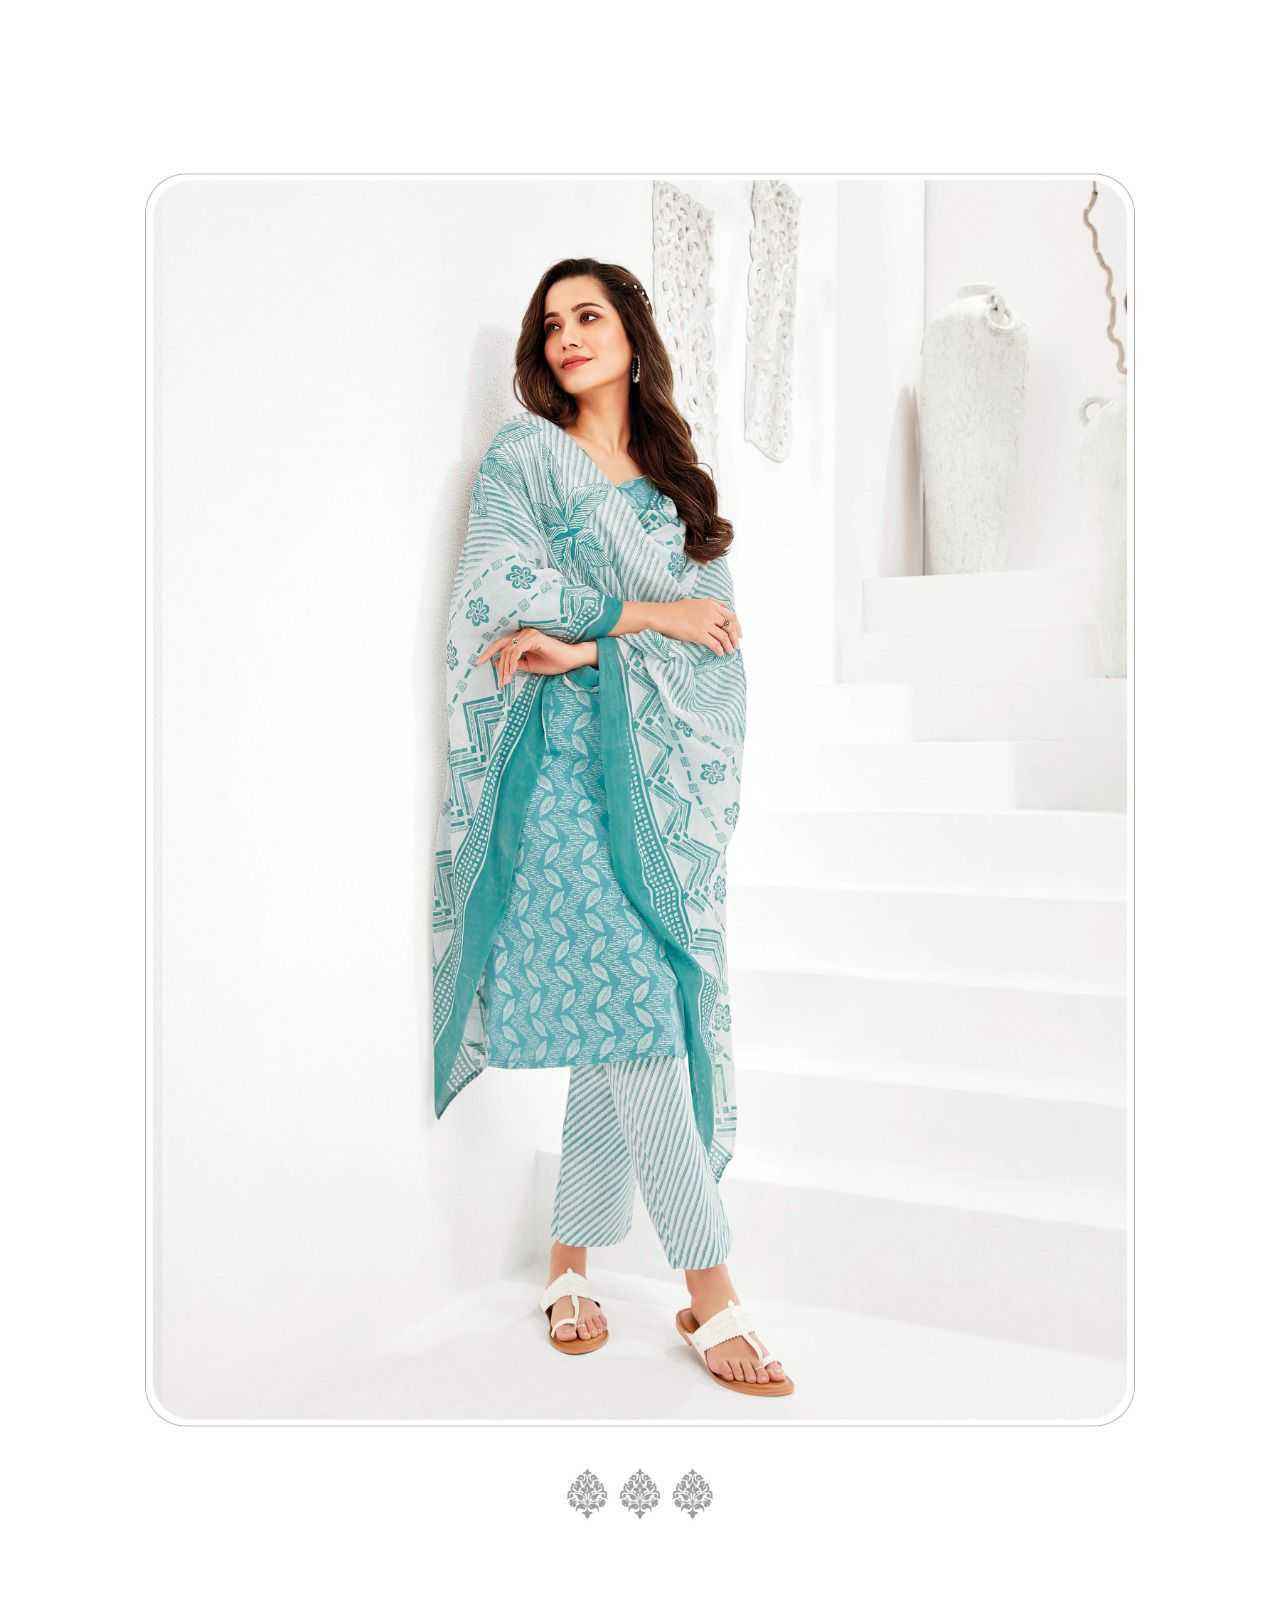 Suryajyoti trendy cotton vol 59 Dress Material Wholesale Price